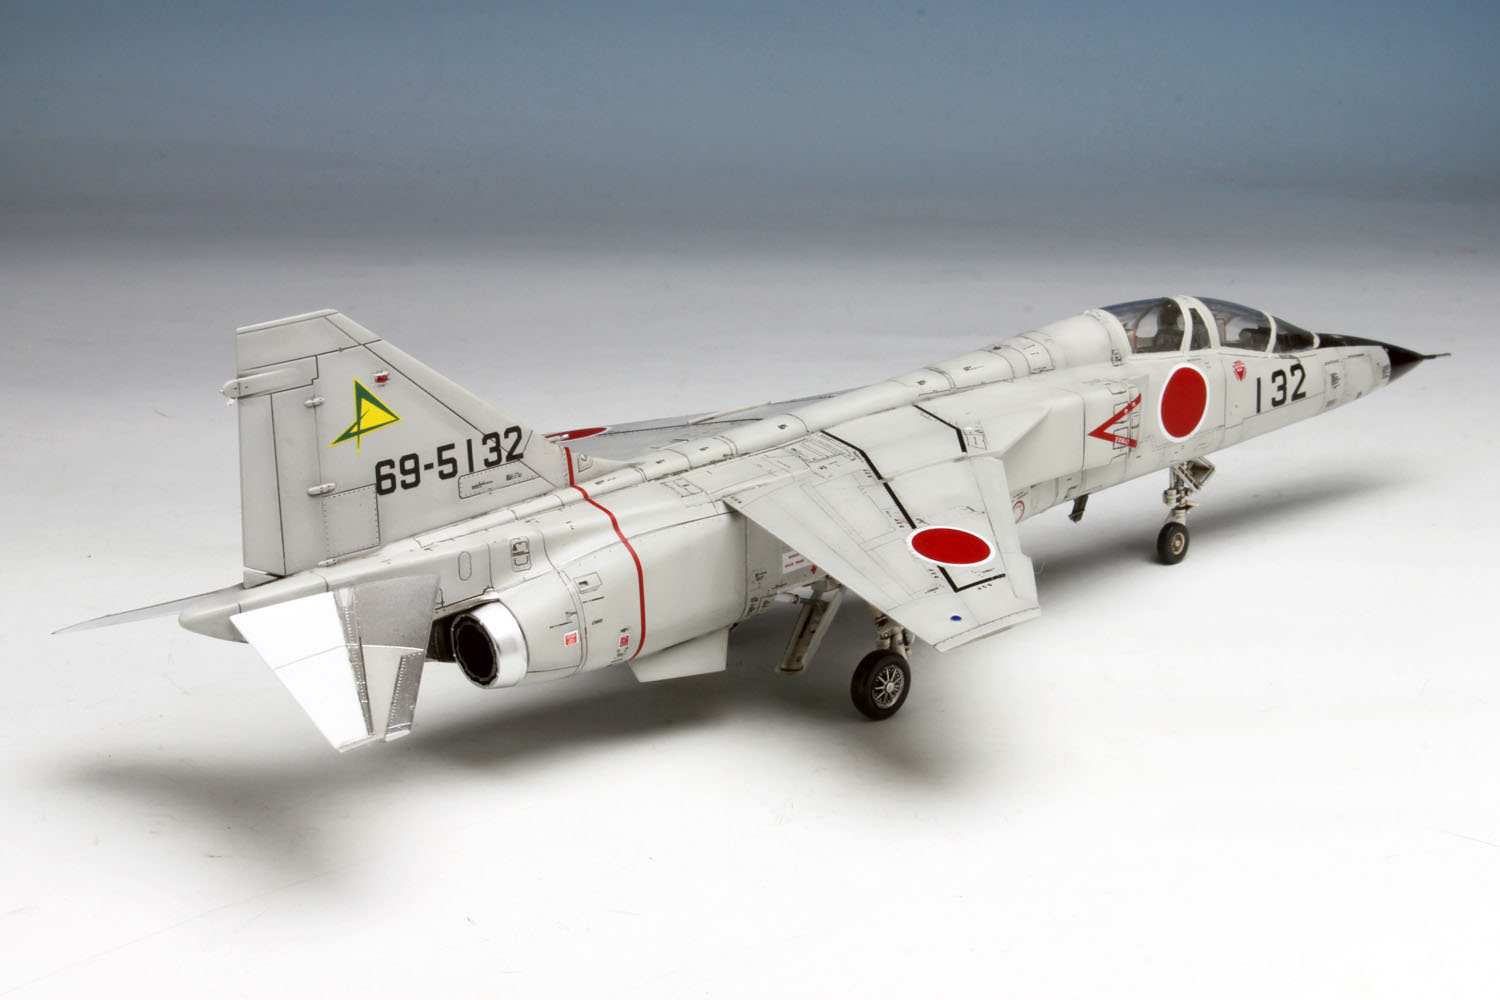 PLATZ 1/72 JASDF Trainer T-2 Late Type with Pilot Figure